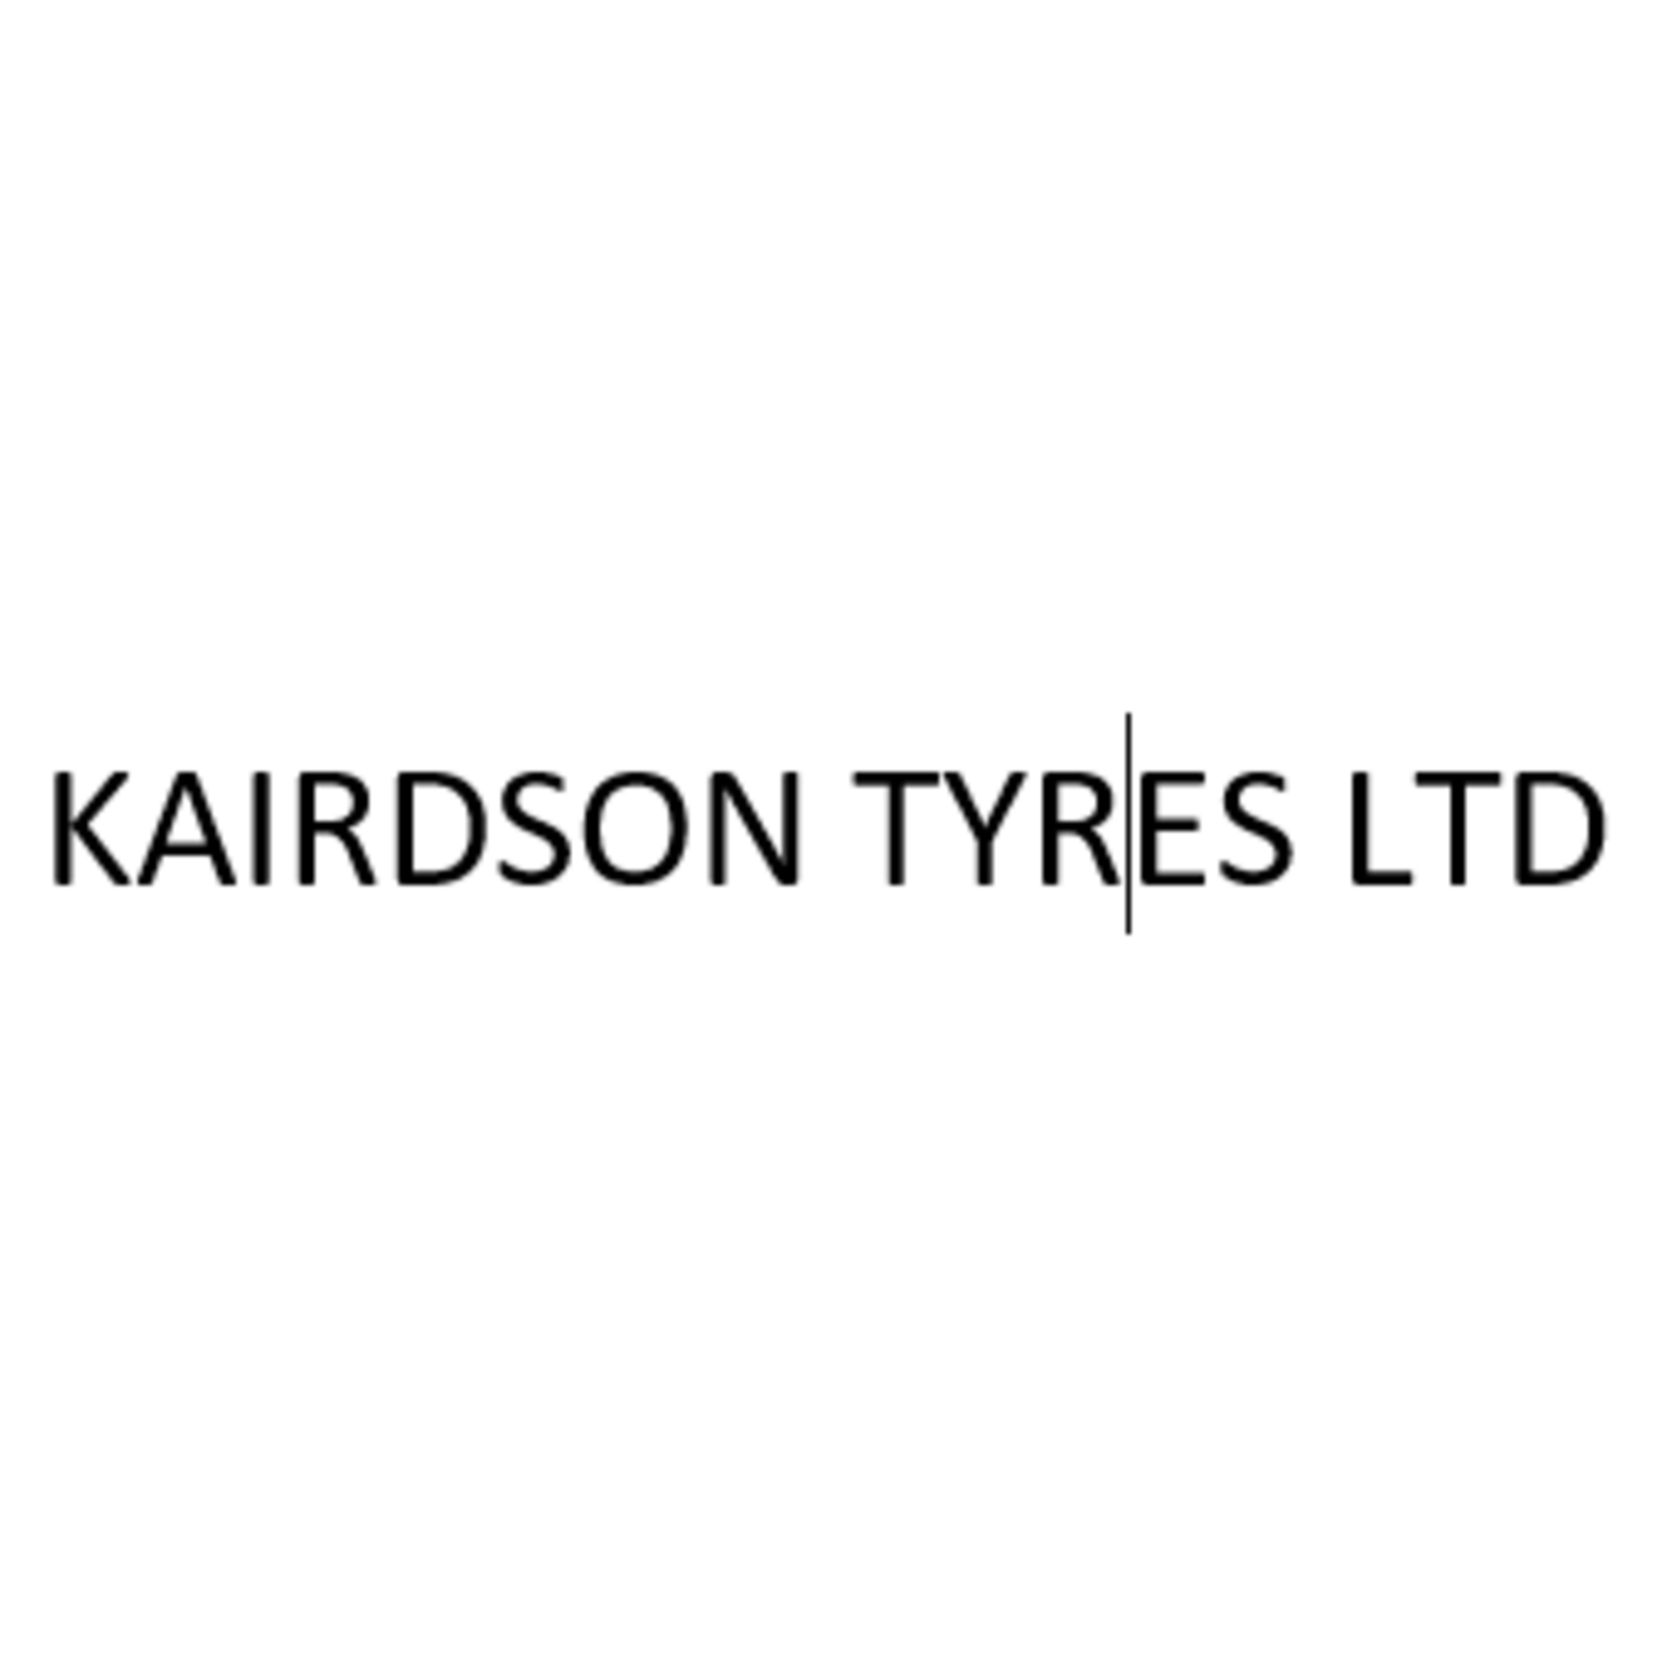 Kairdson Tyres Limited - Ellon, Aberdeenshire AB41 9AW - 01358 720030 | ShowMeLocal.com